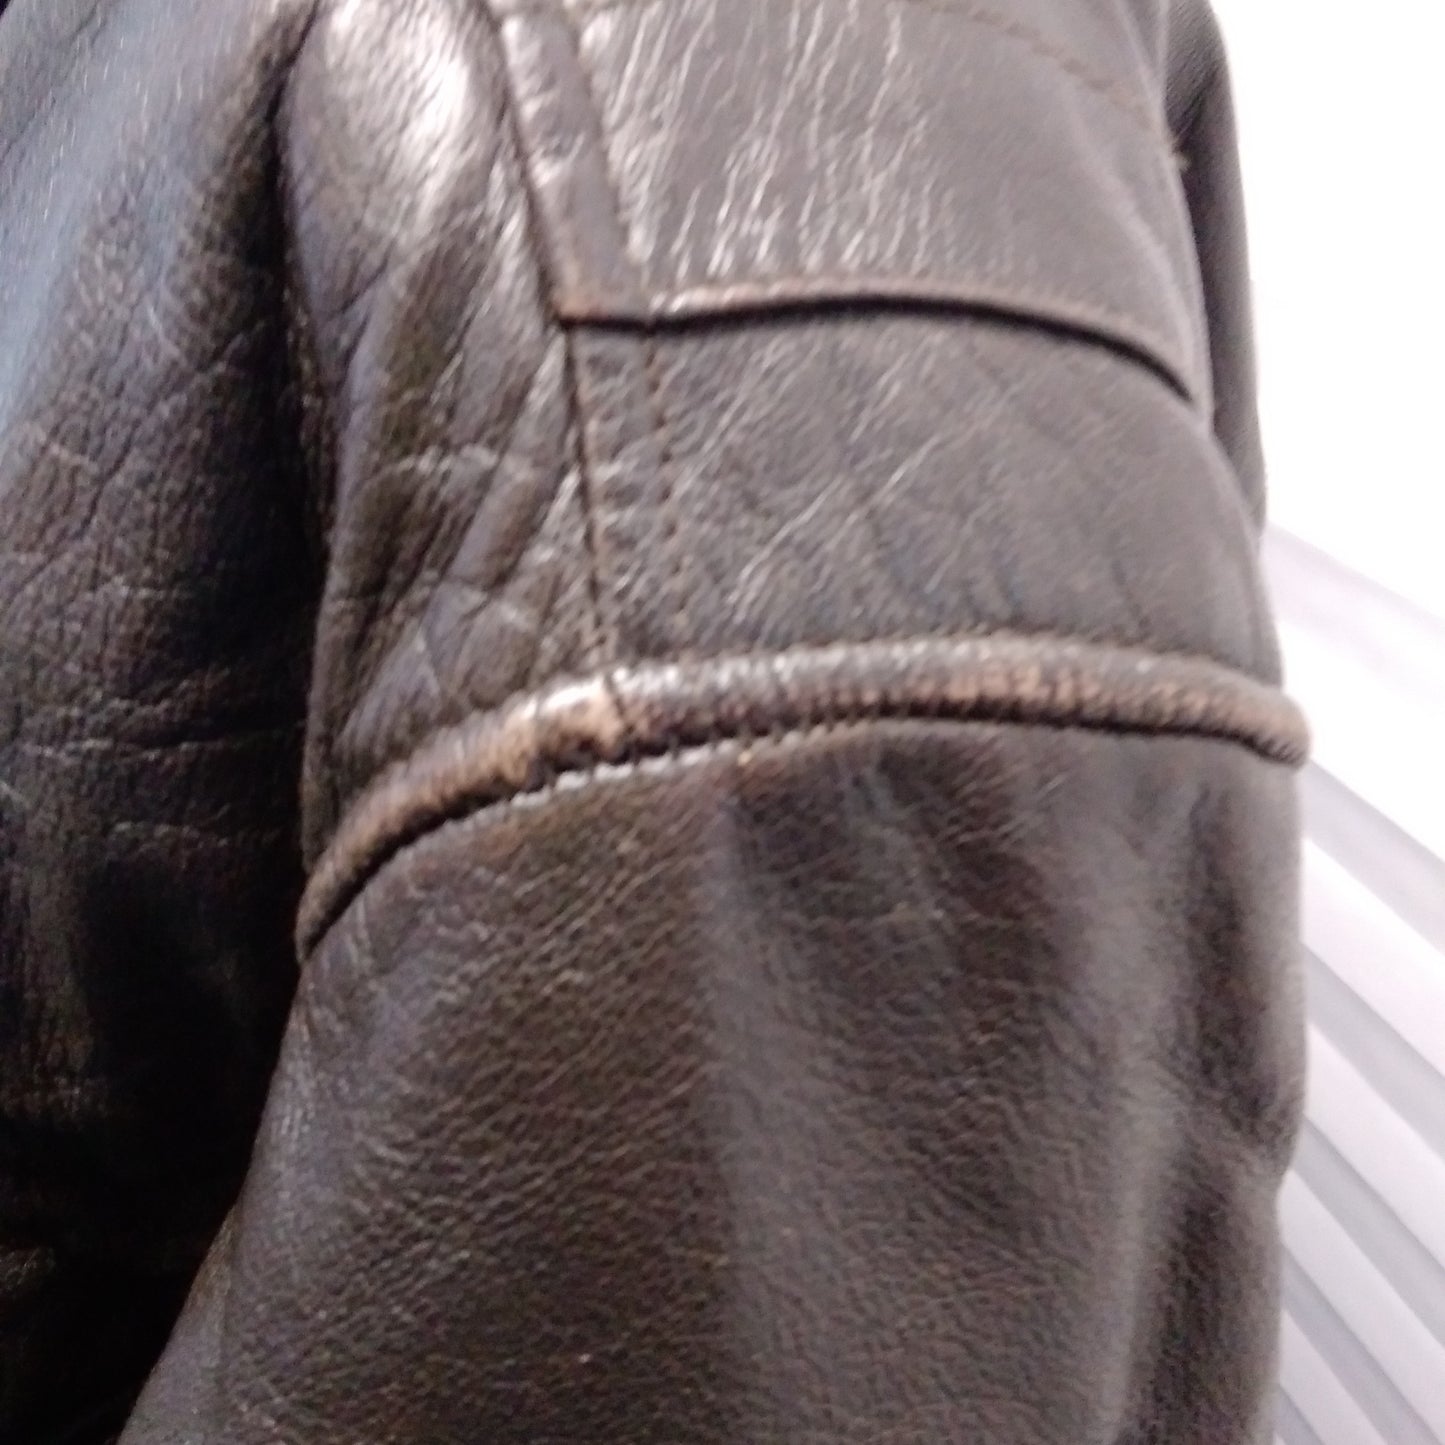 Perry Ellis Brown Leather Coat Jacket - L